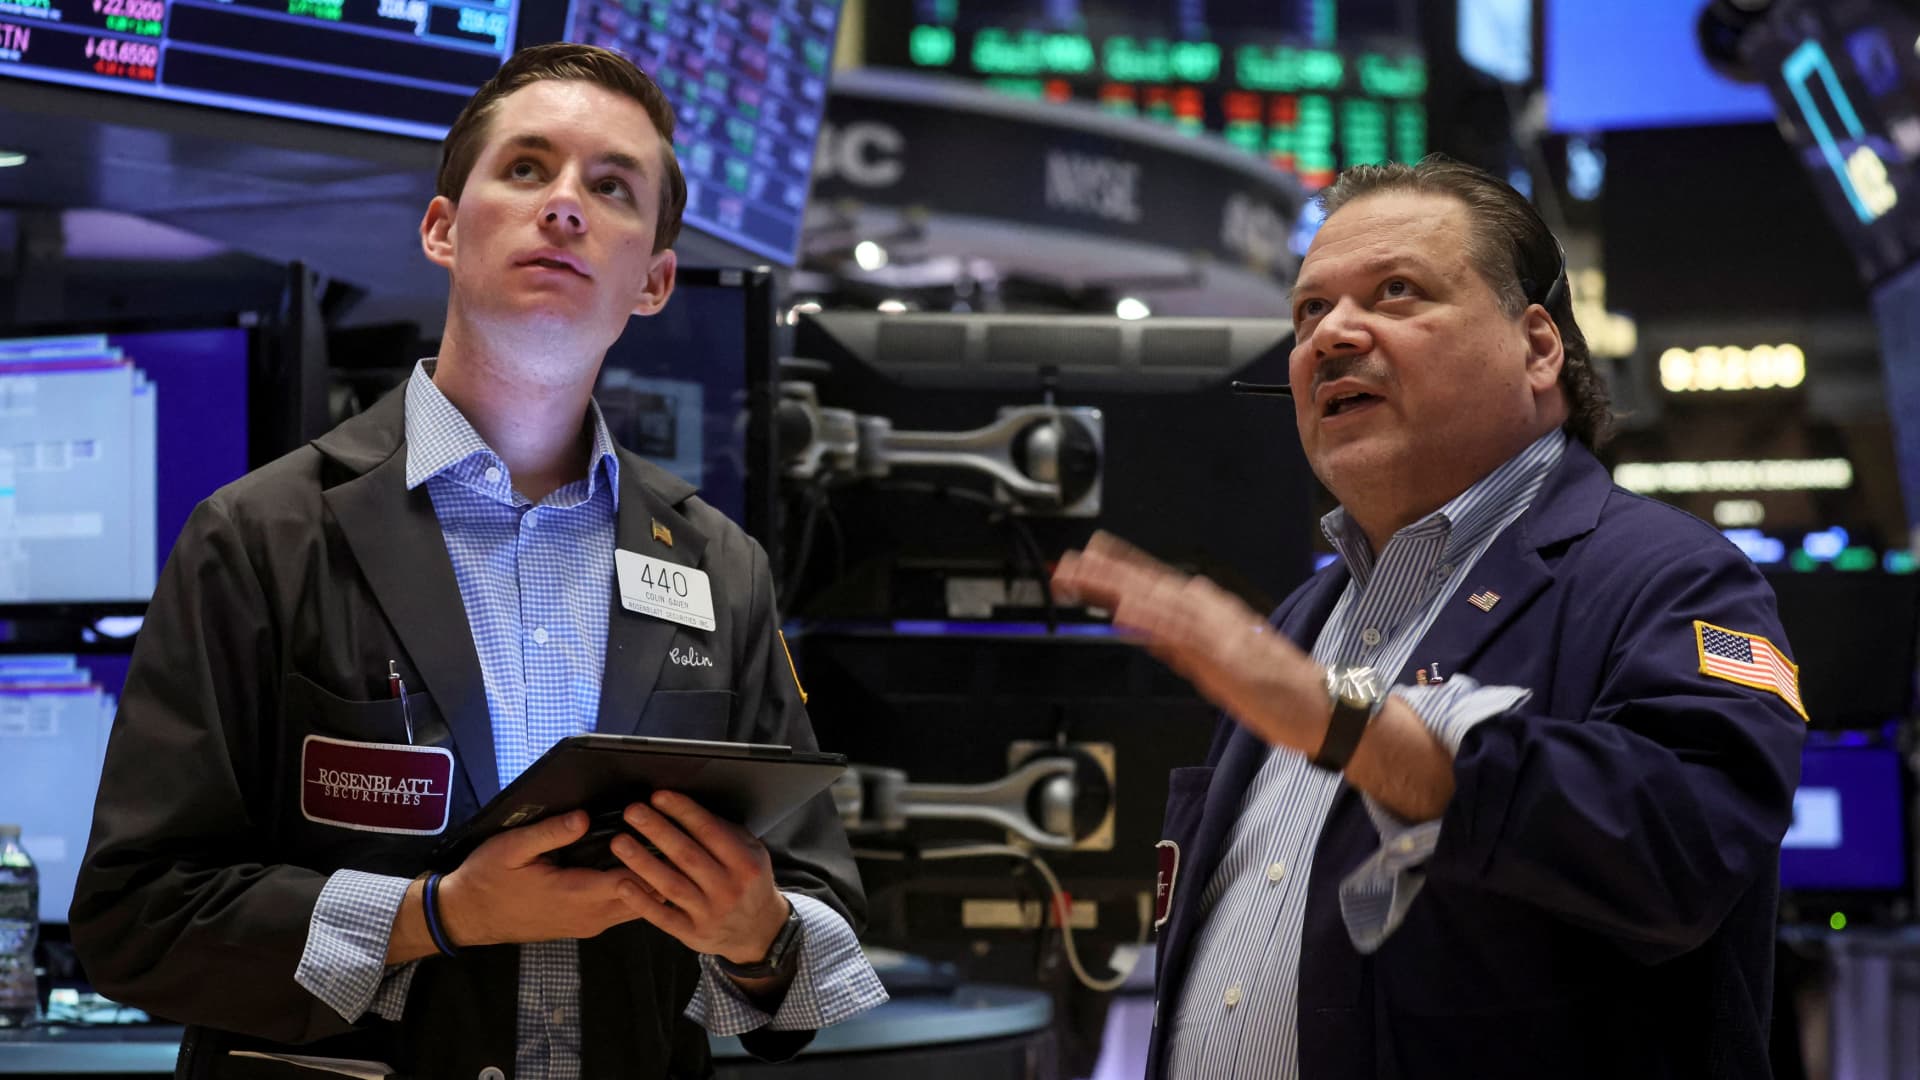 Broadcom, Chevron among Wall Street’s favorite dividend stocks heading into likely treacherous second half